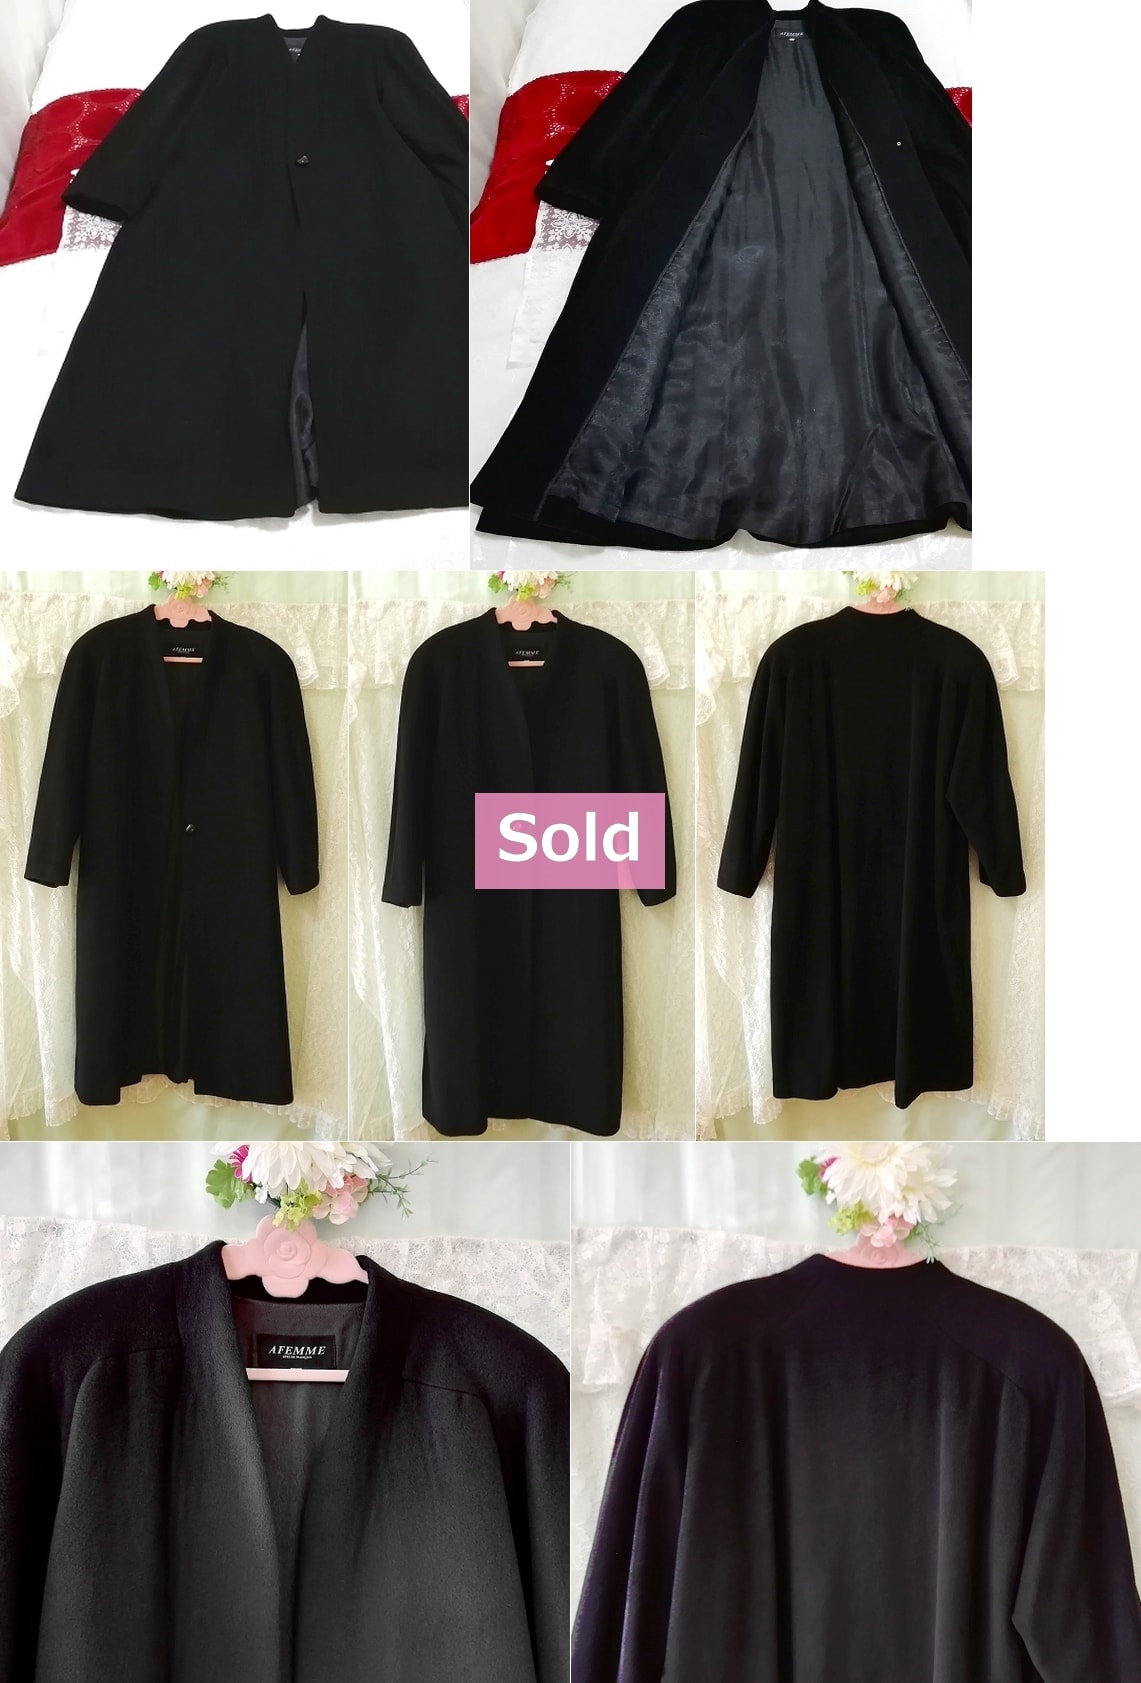 AFEMME Atelier Franais カシミア100% 黒マキシロング羽織カーディガンコート Cashmere 100% black maxi long cardigan coat